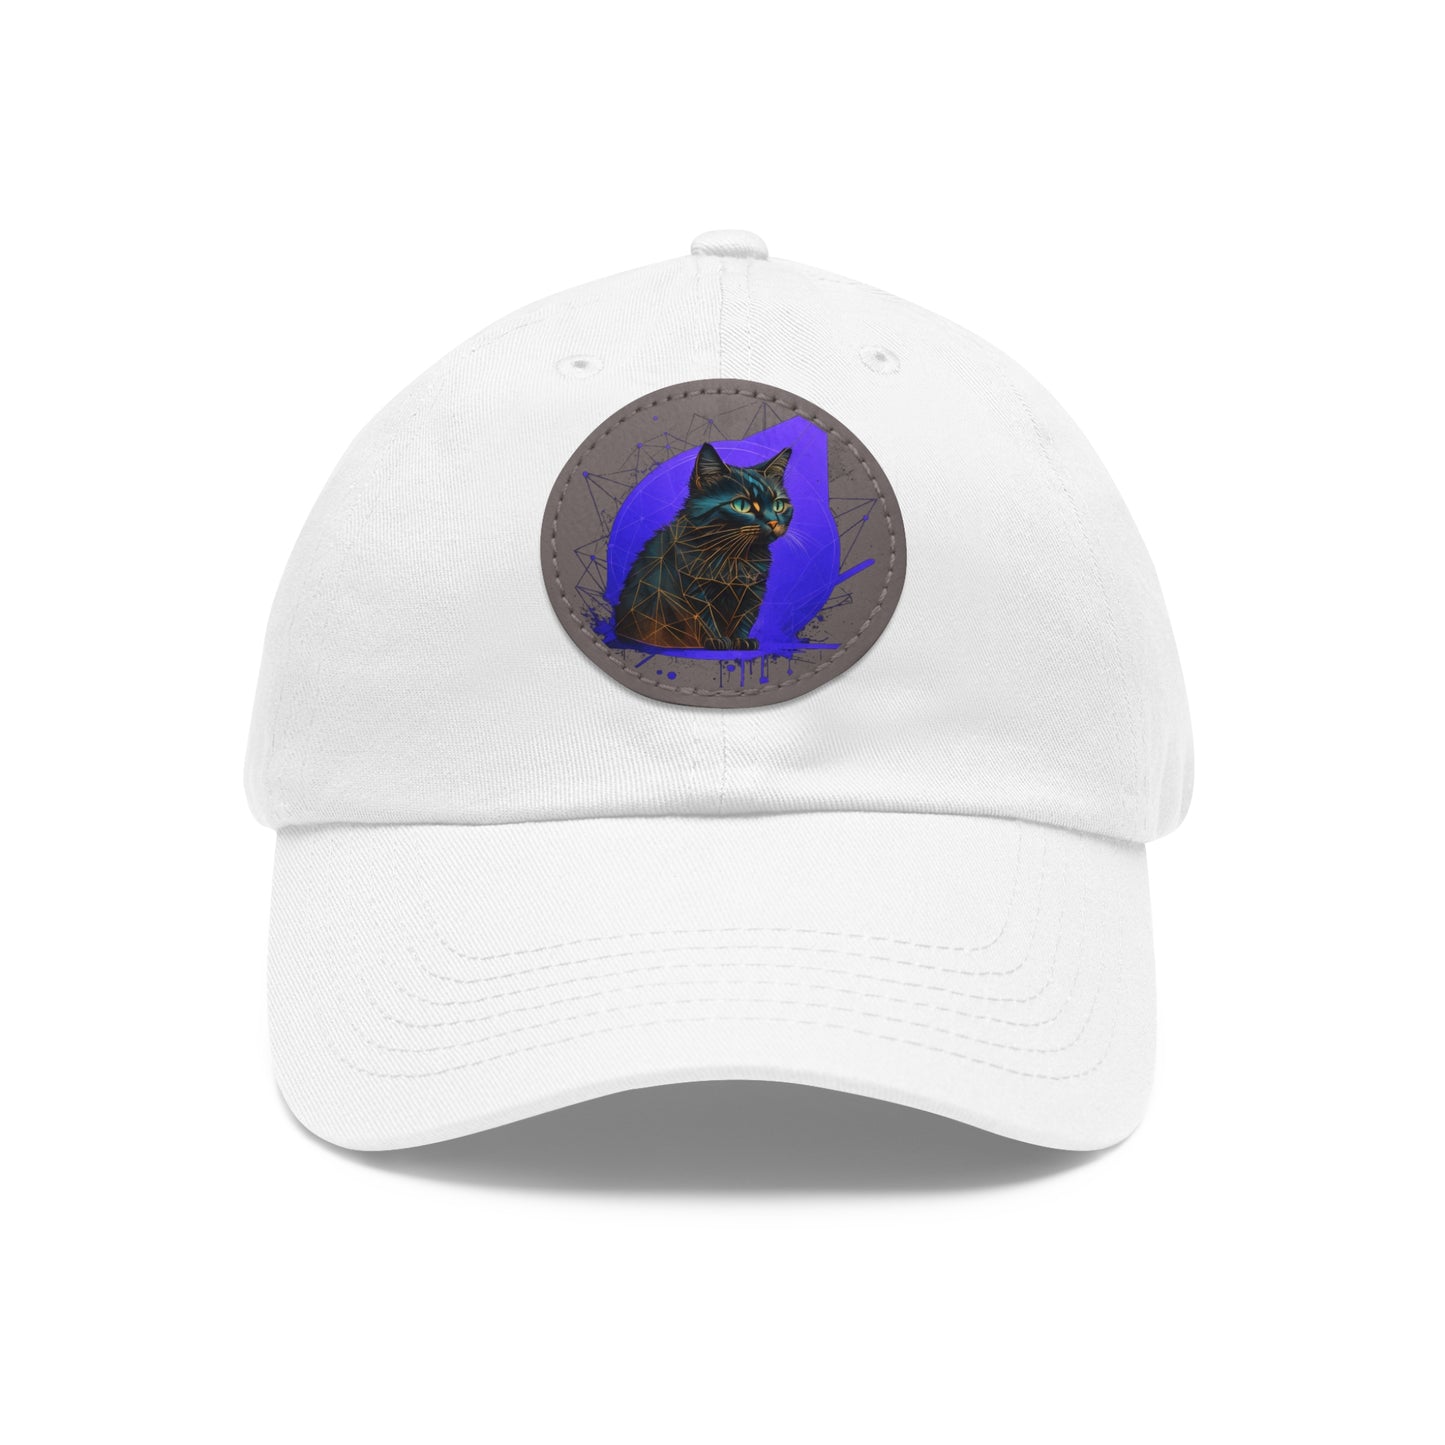 White baseball hat with apache cat logo